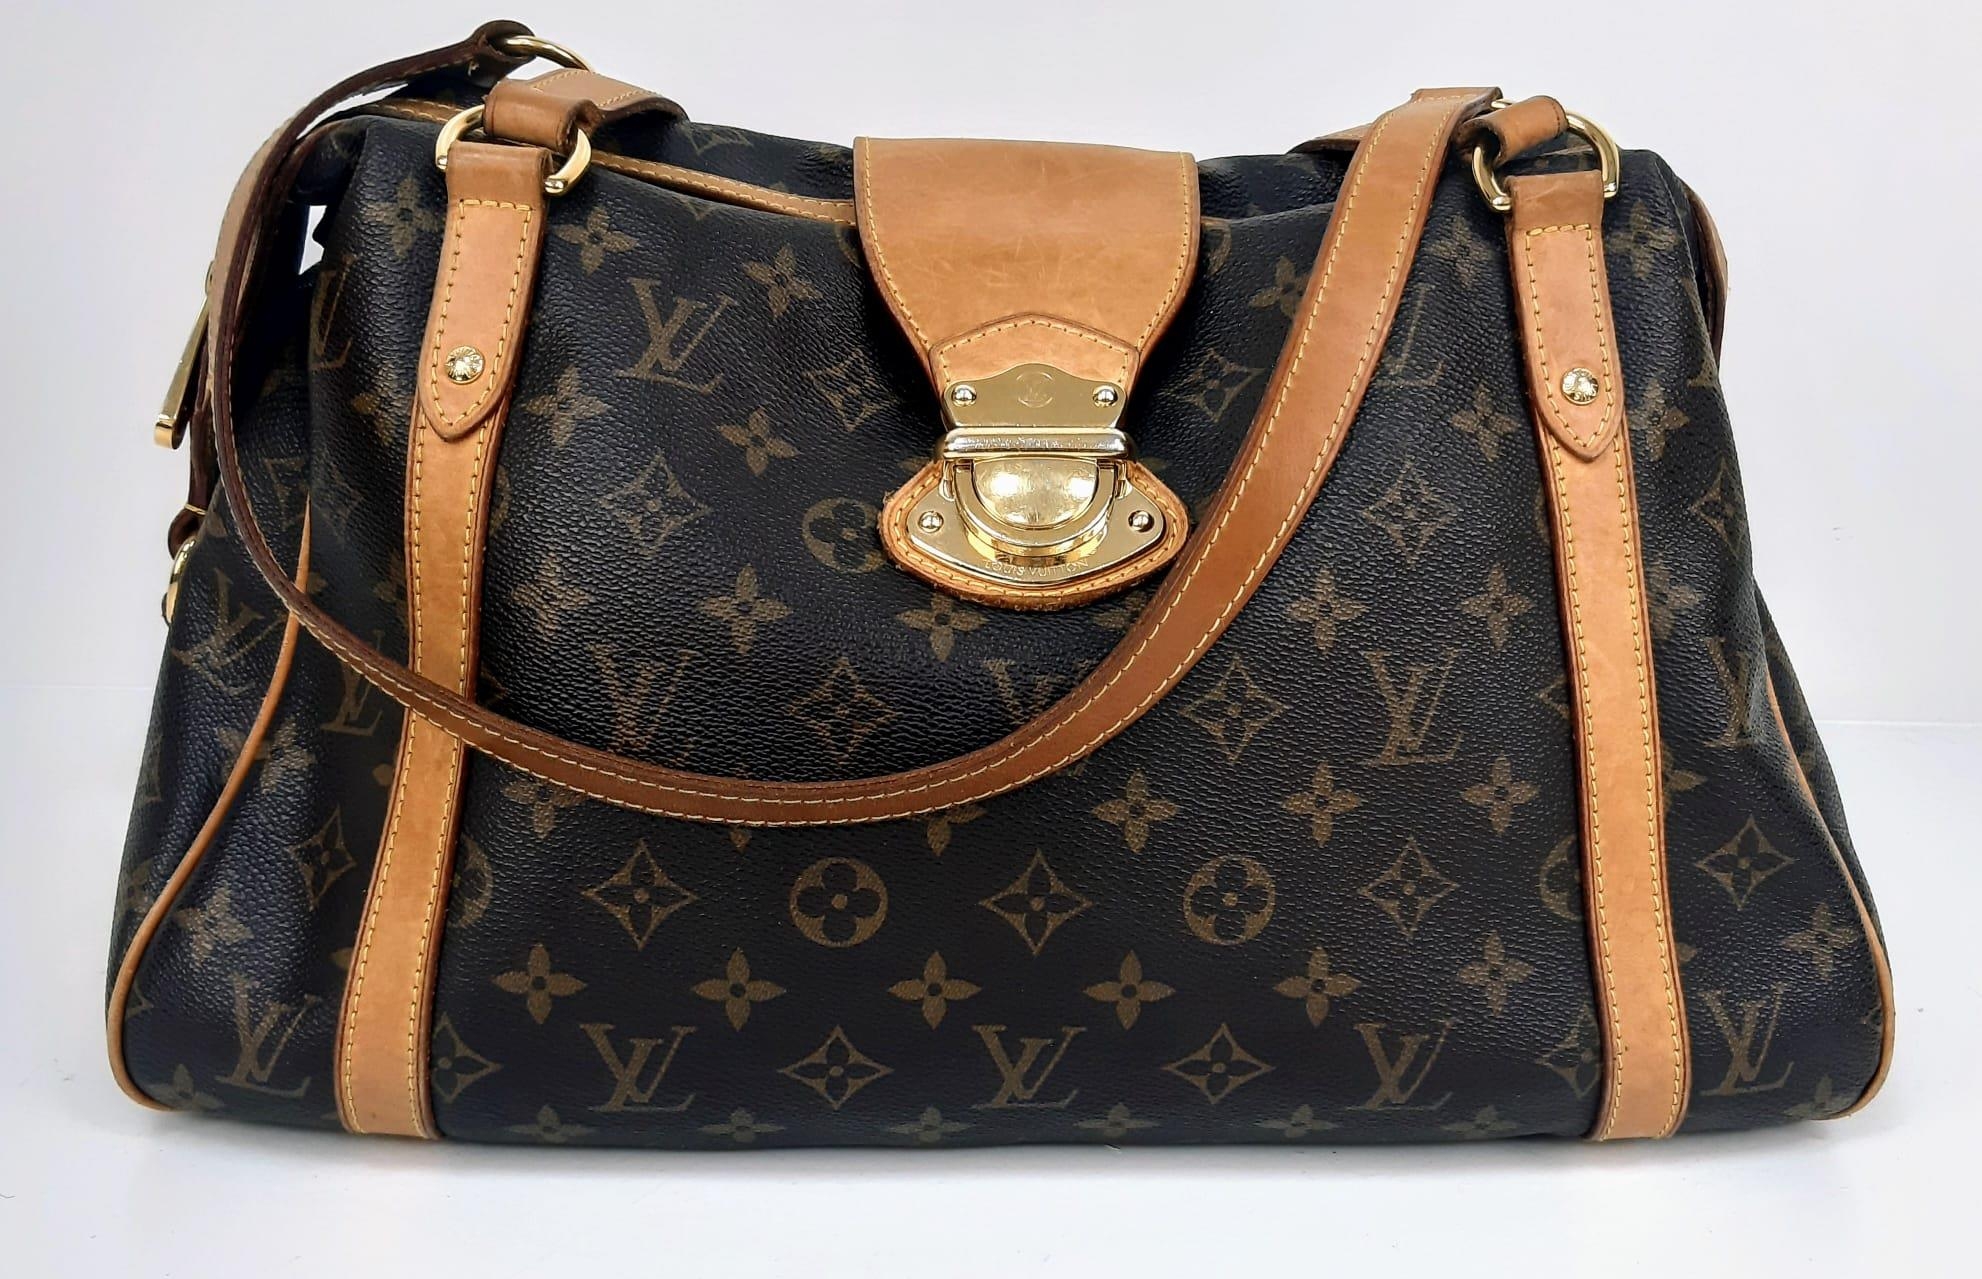 A Louis Vuitton Monogram Canvas Stresa PM Bag. Leather trim with gold-tone hardware. Nylon lined